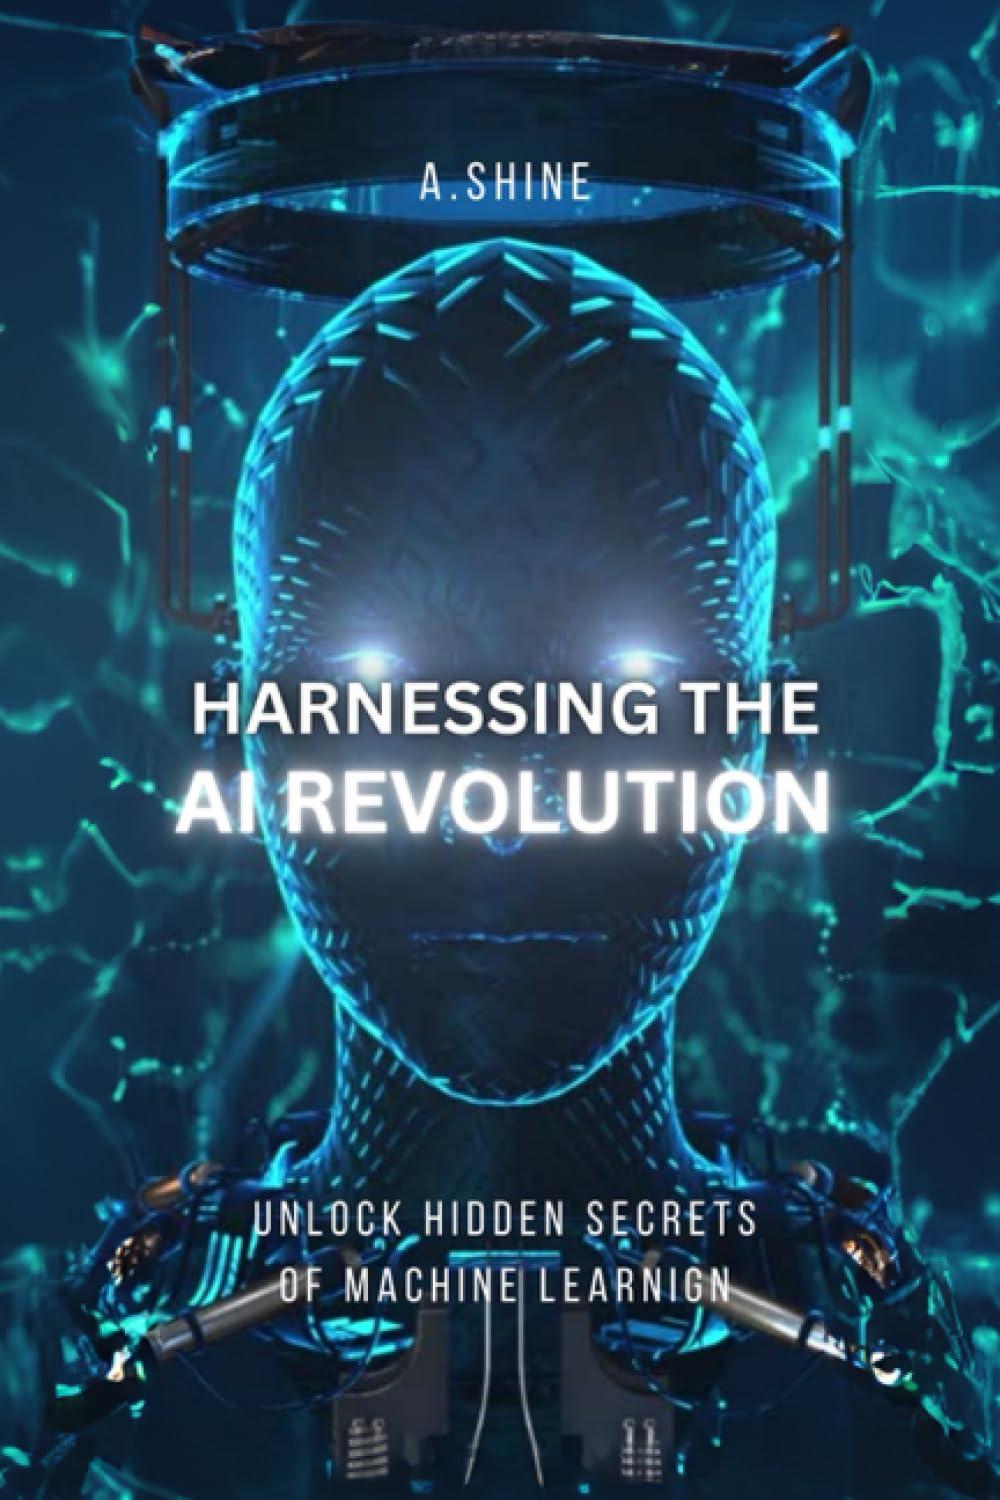 harnessing the ai revolution unlock hidden secrets of machine learning 1st edition alex shine b0c9sqhplq,